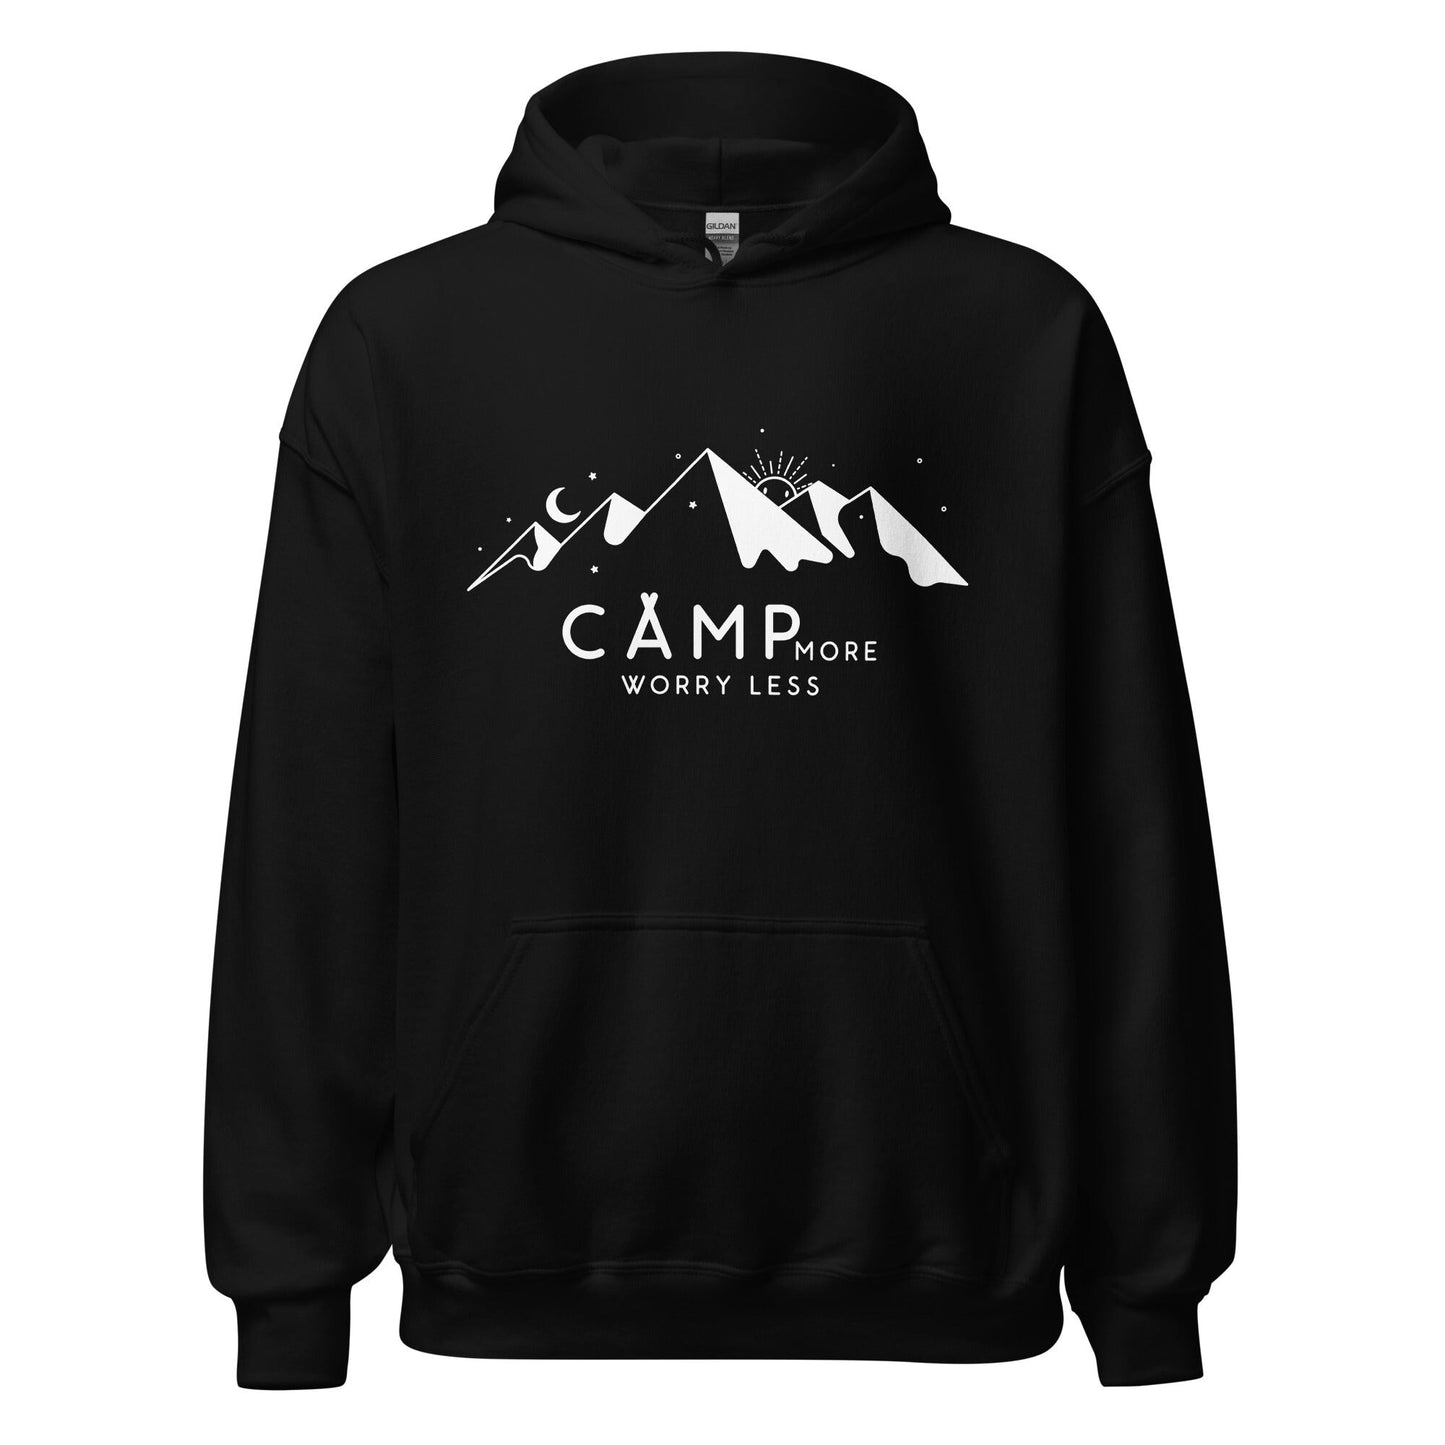 Camp Graphic Hoodies and Sweatshirts